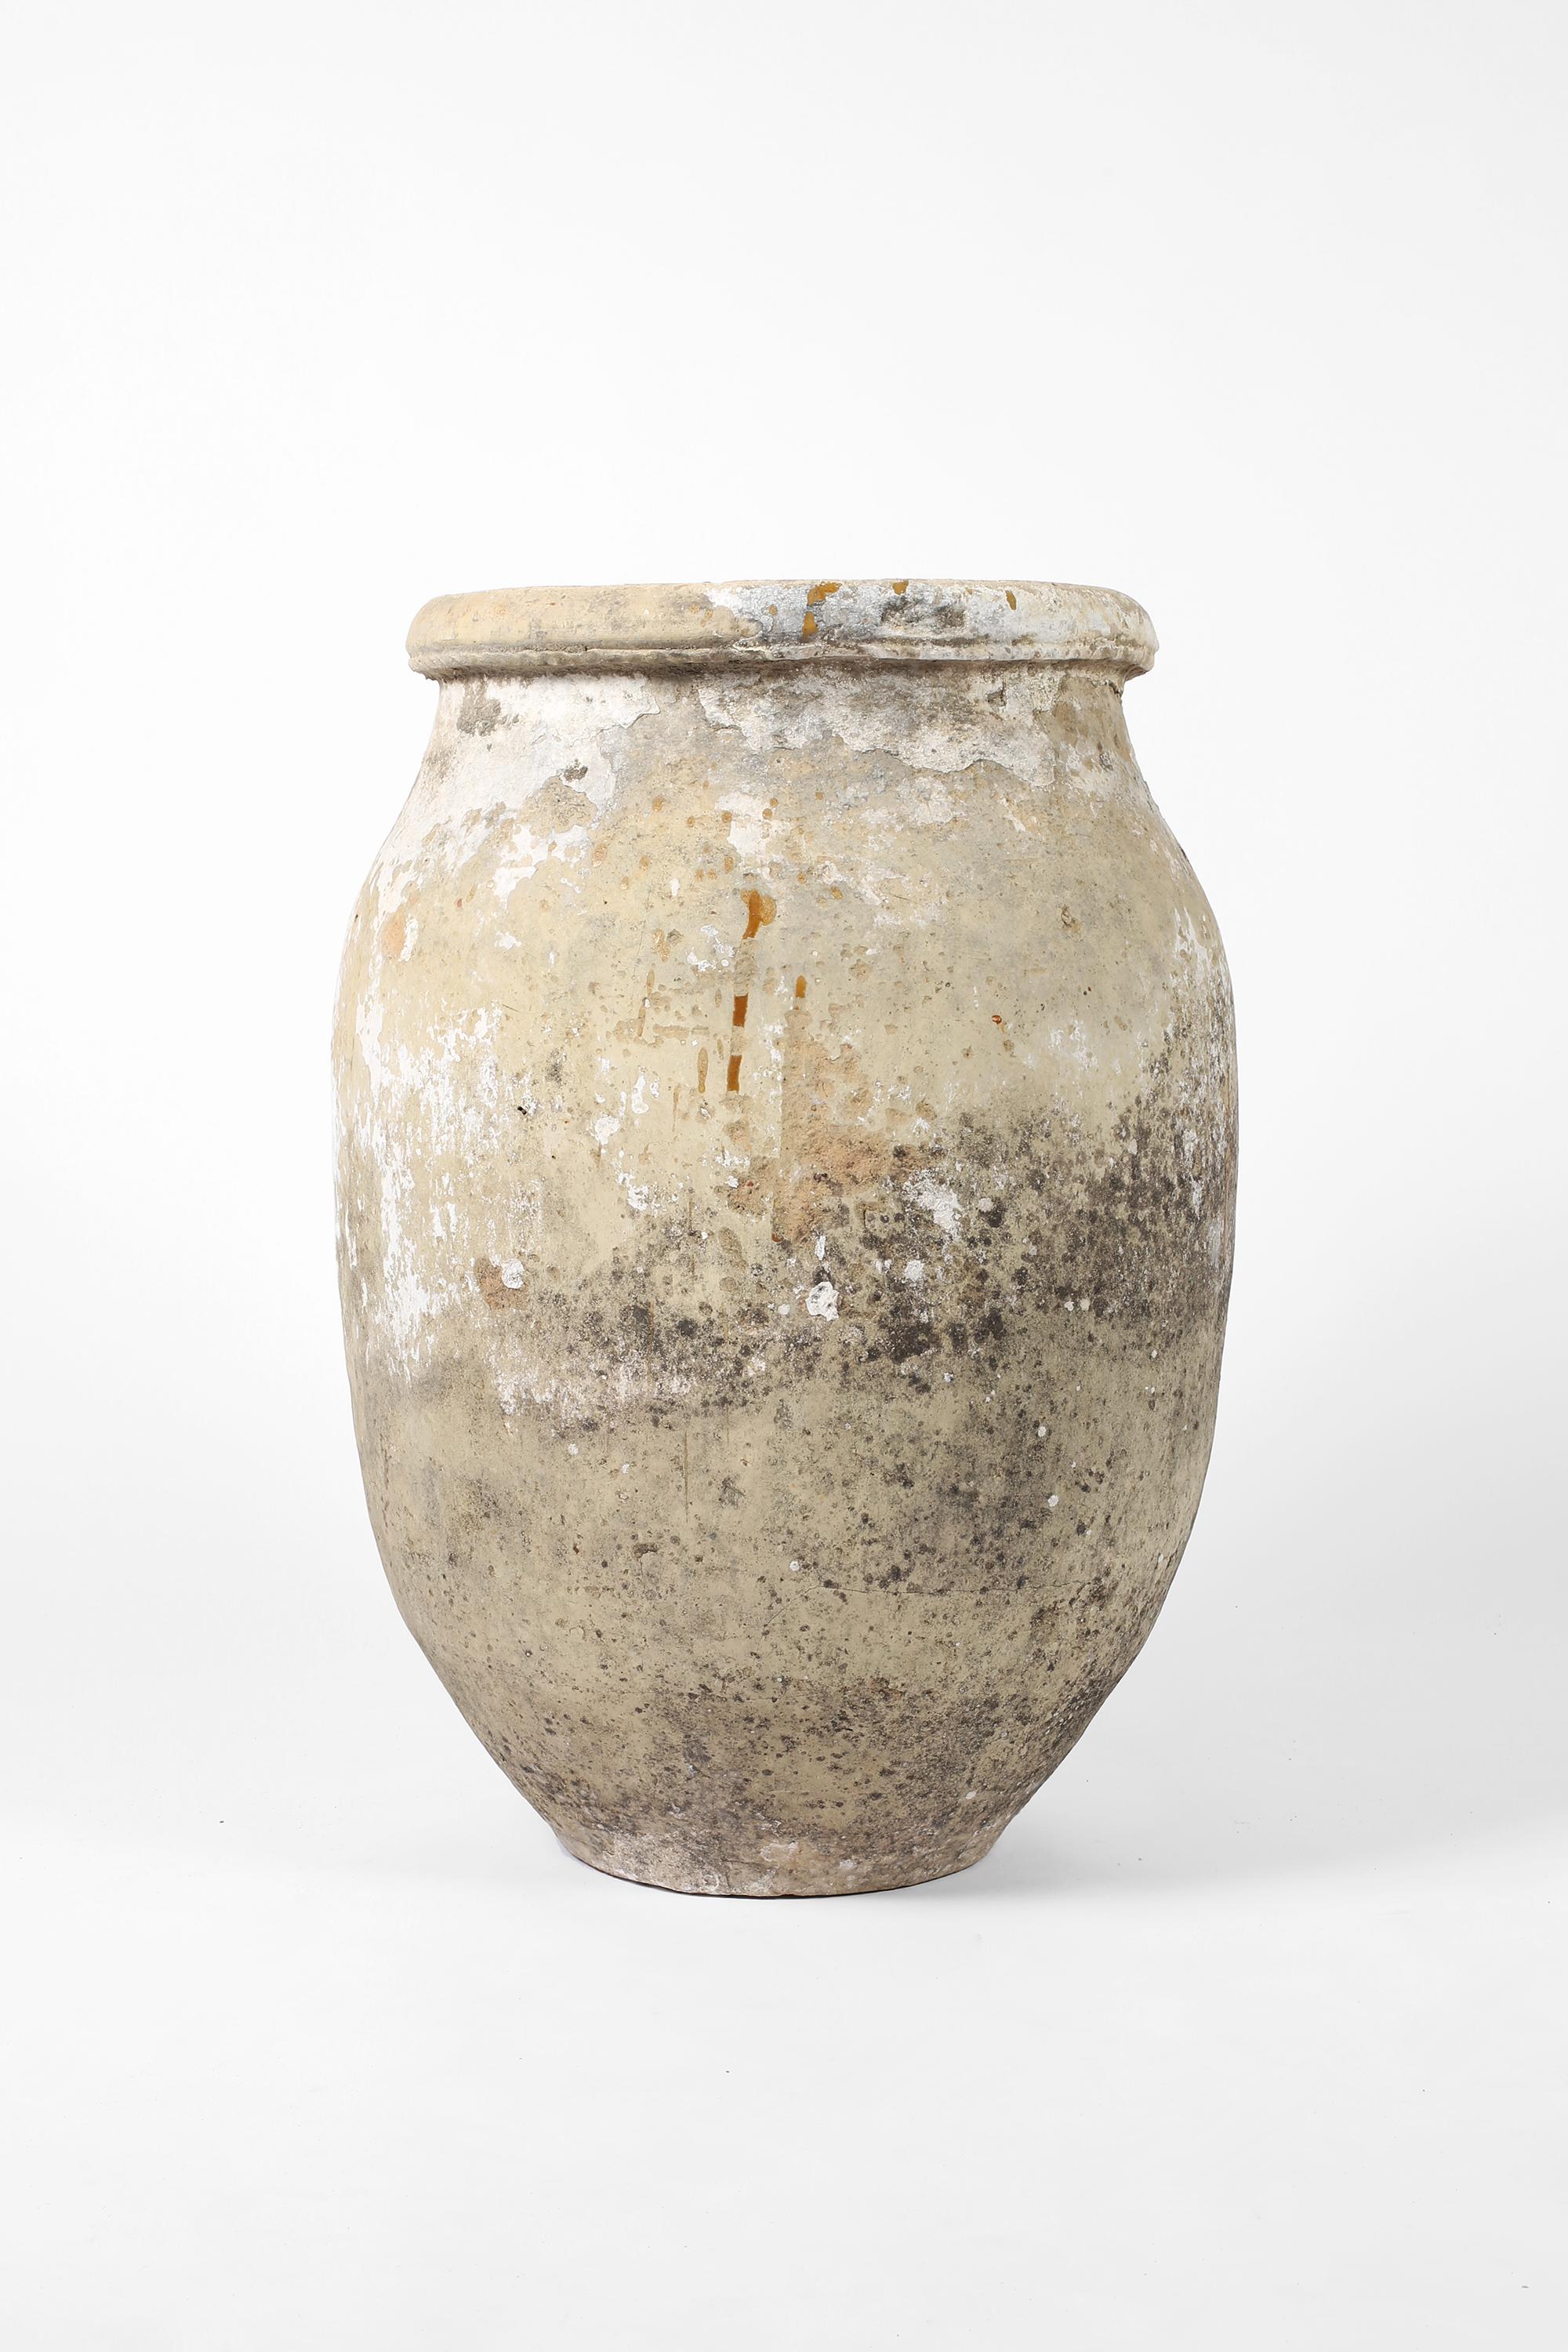 Large Stapled Southern Earthenware Wabi-Sabi Spanish Jar c. 1800 For Sale 6